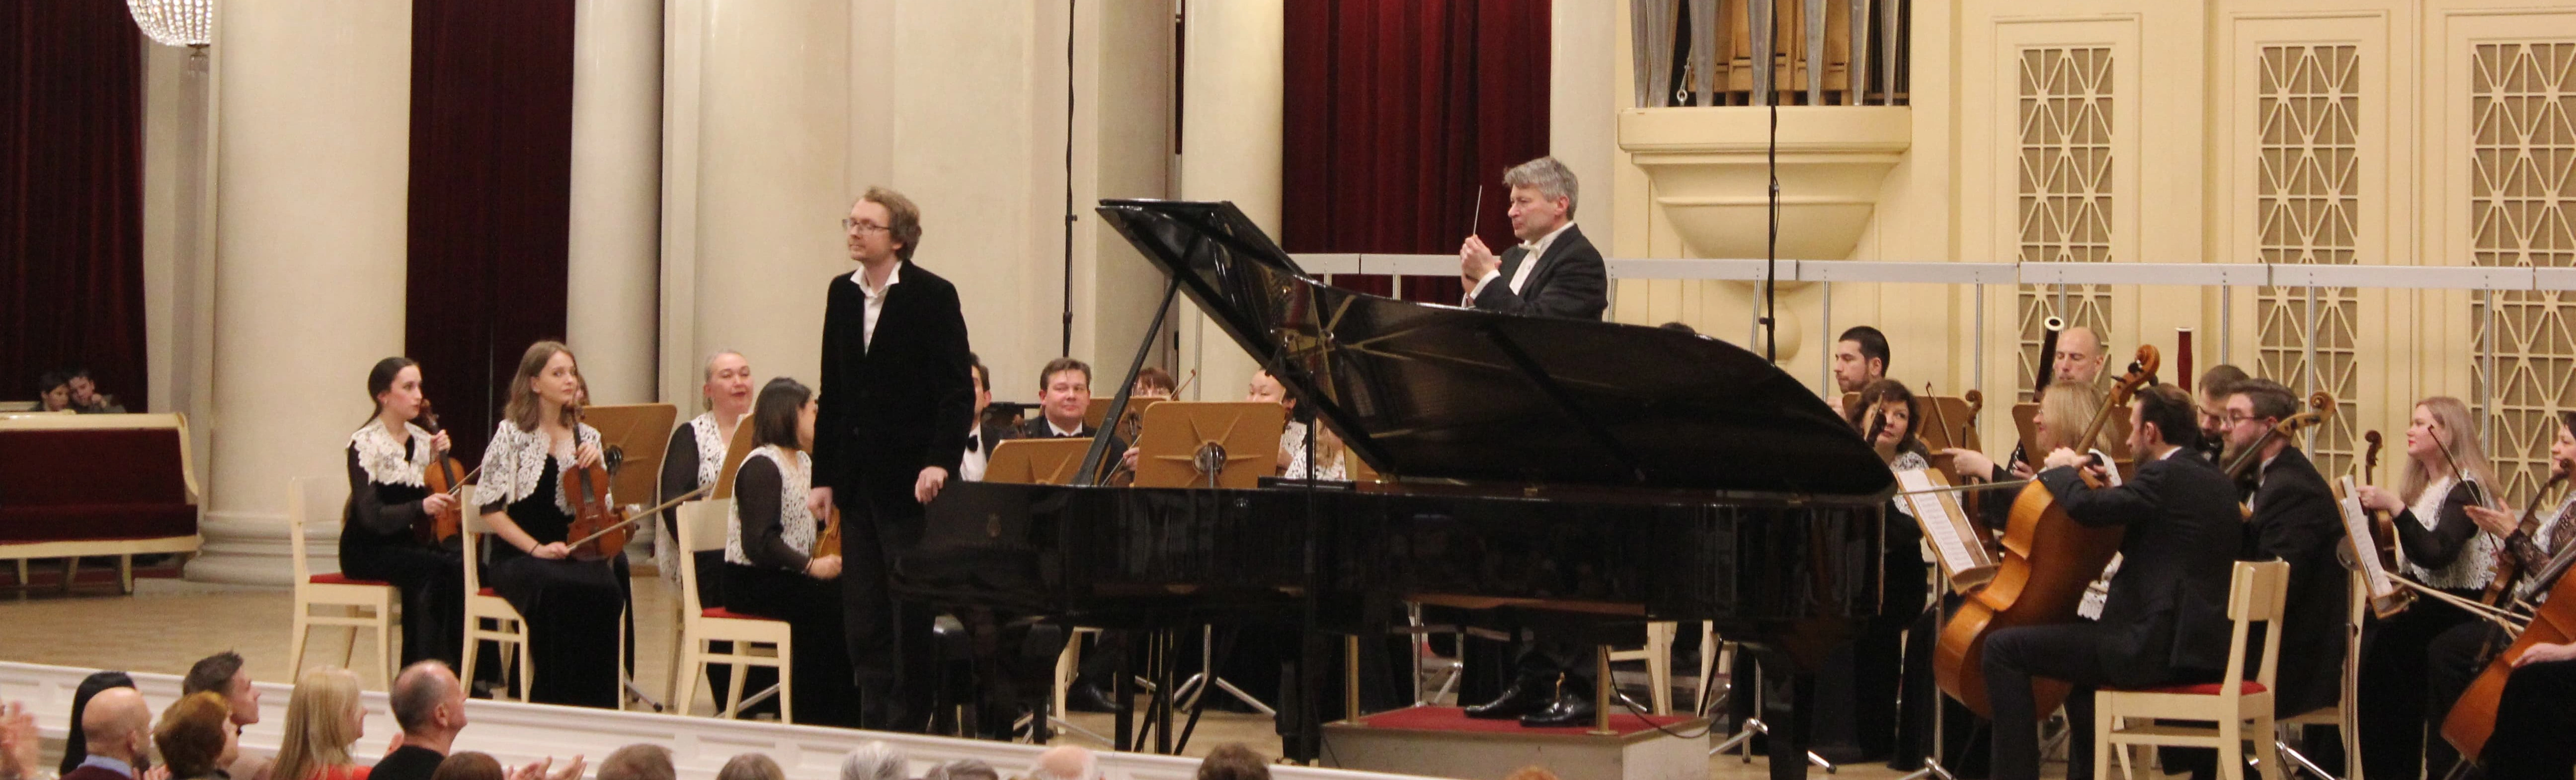 Осенний сезон в Филармонии Д.Д. Шостаковича откроет «Беседа. Игра. Прощание»